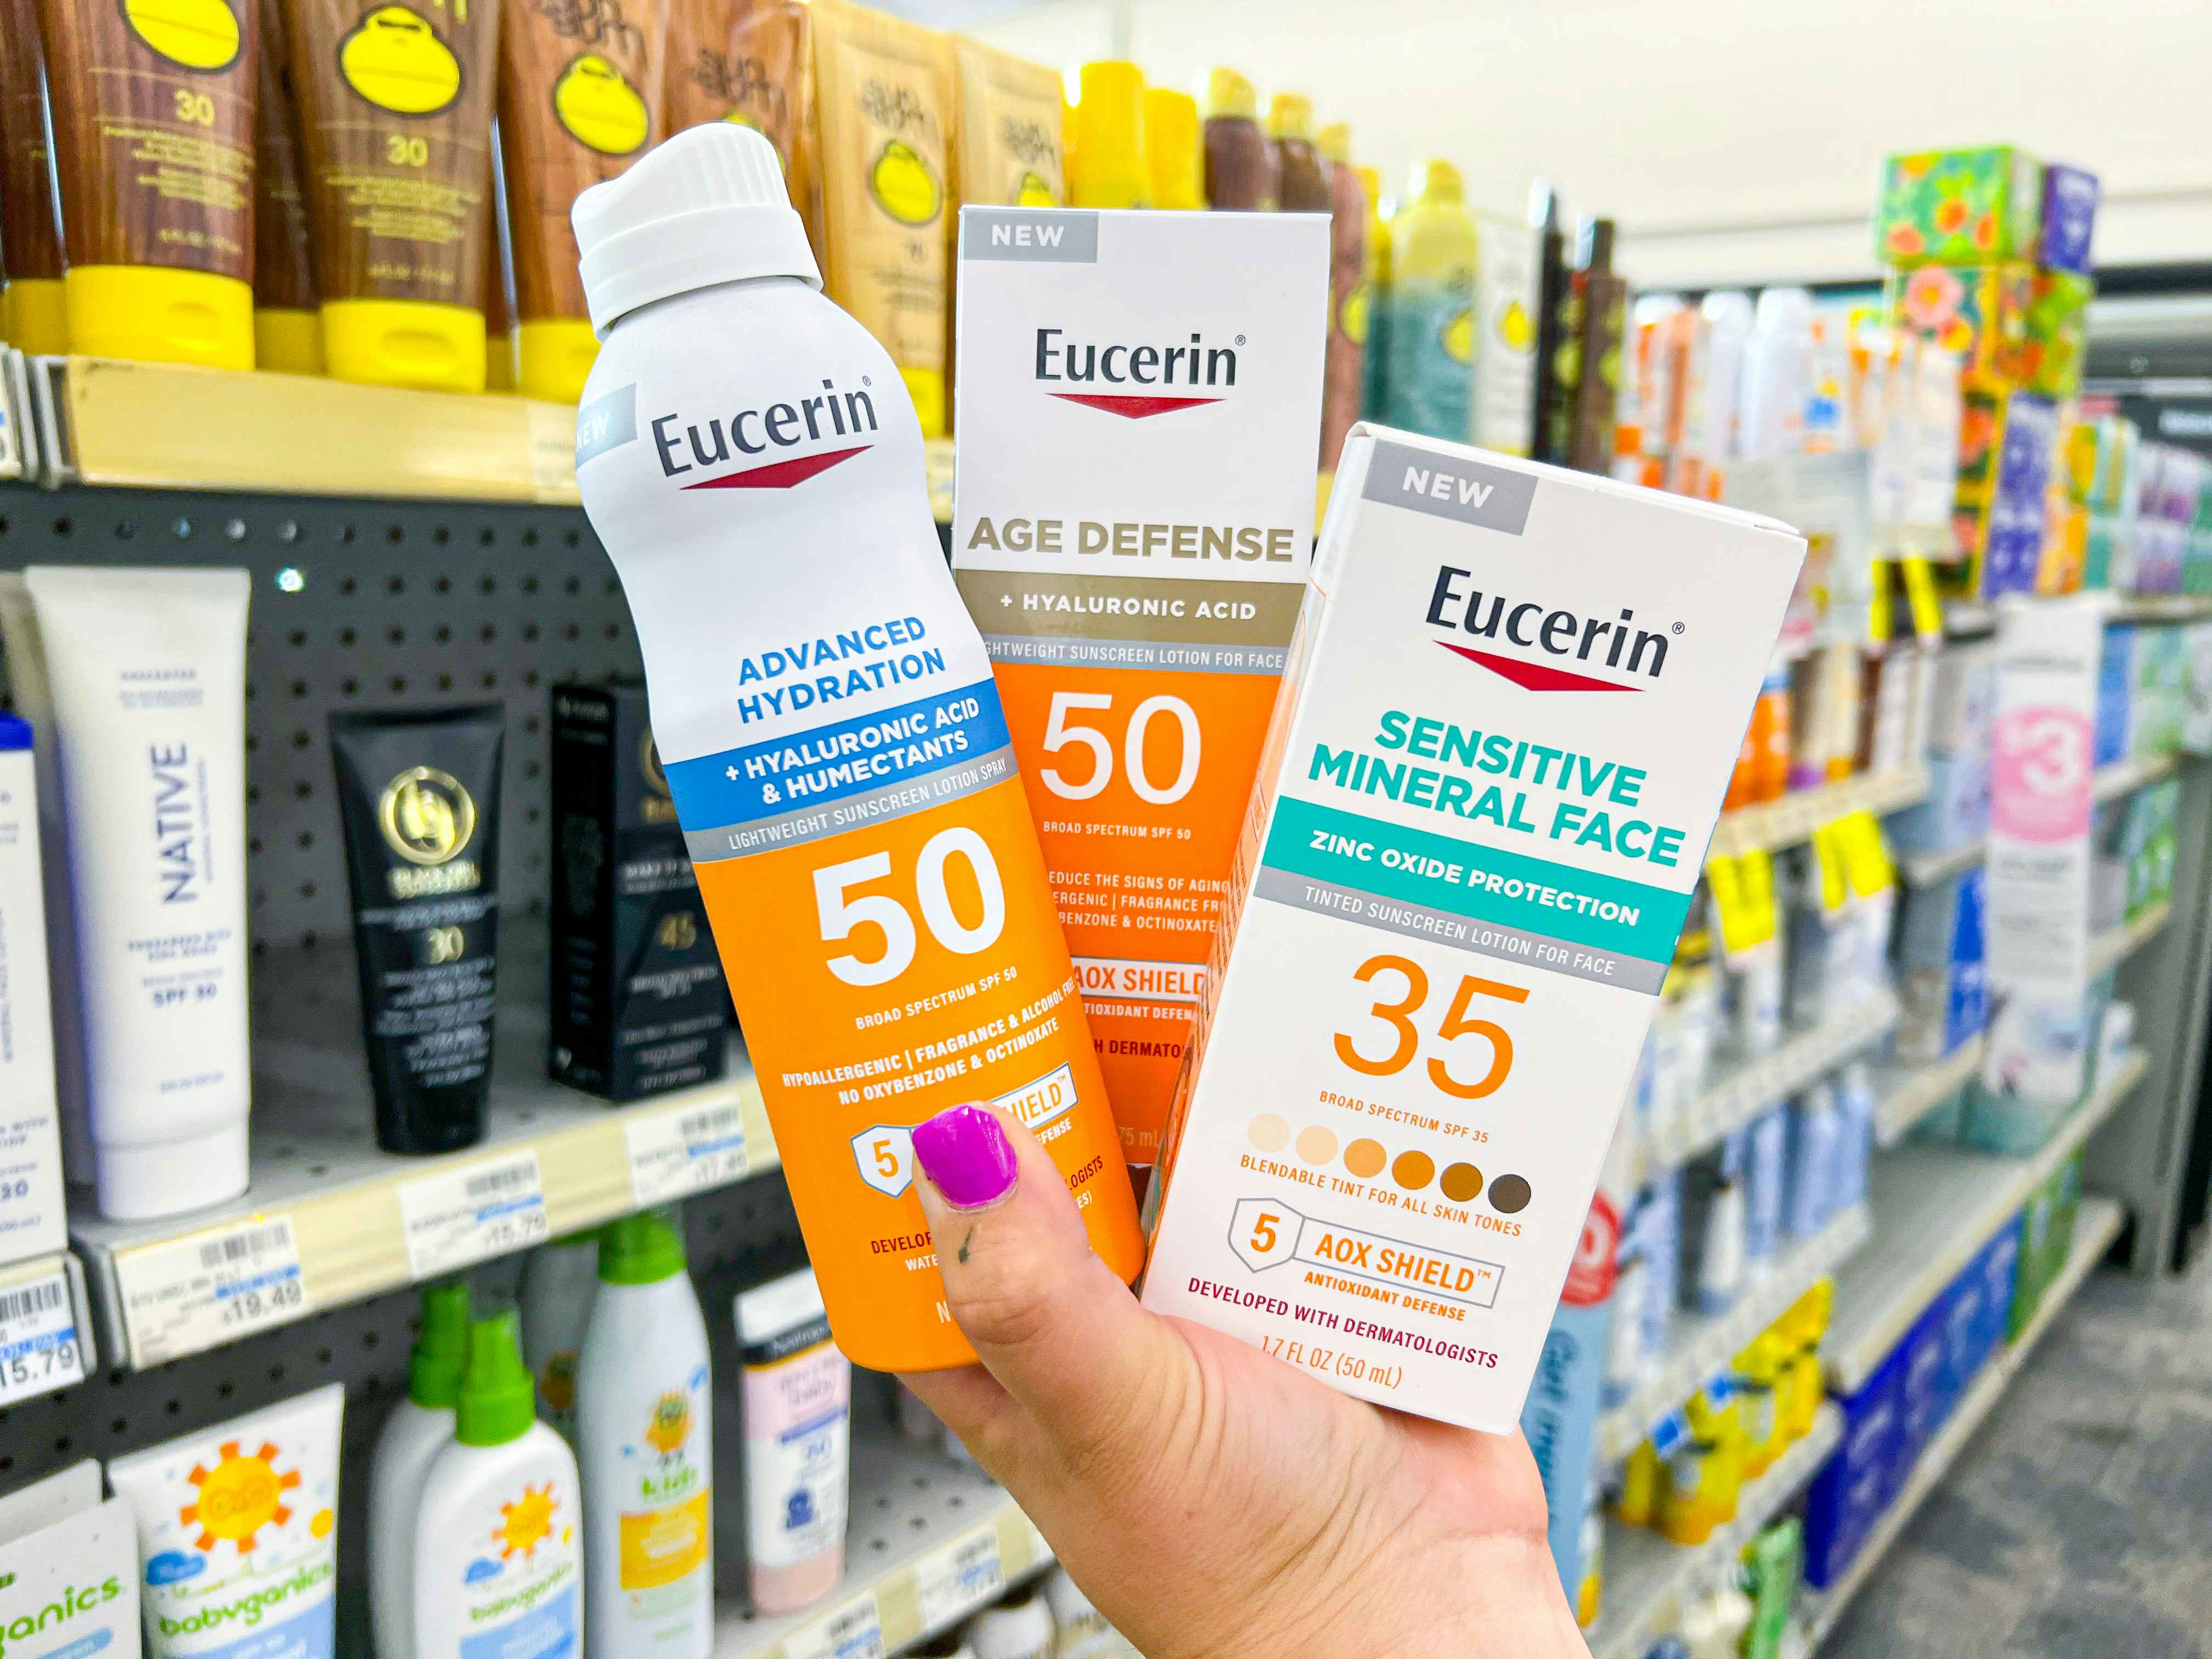 Eucerin in hand shot of 3 sunscreens